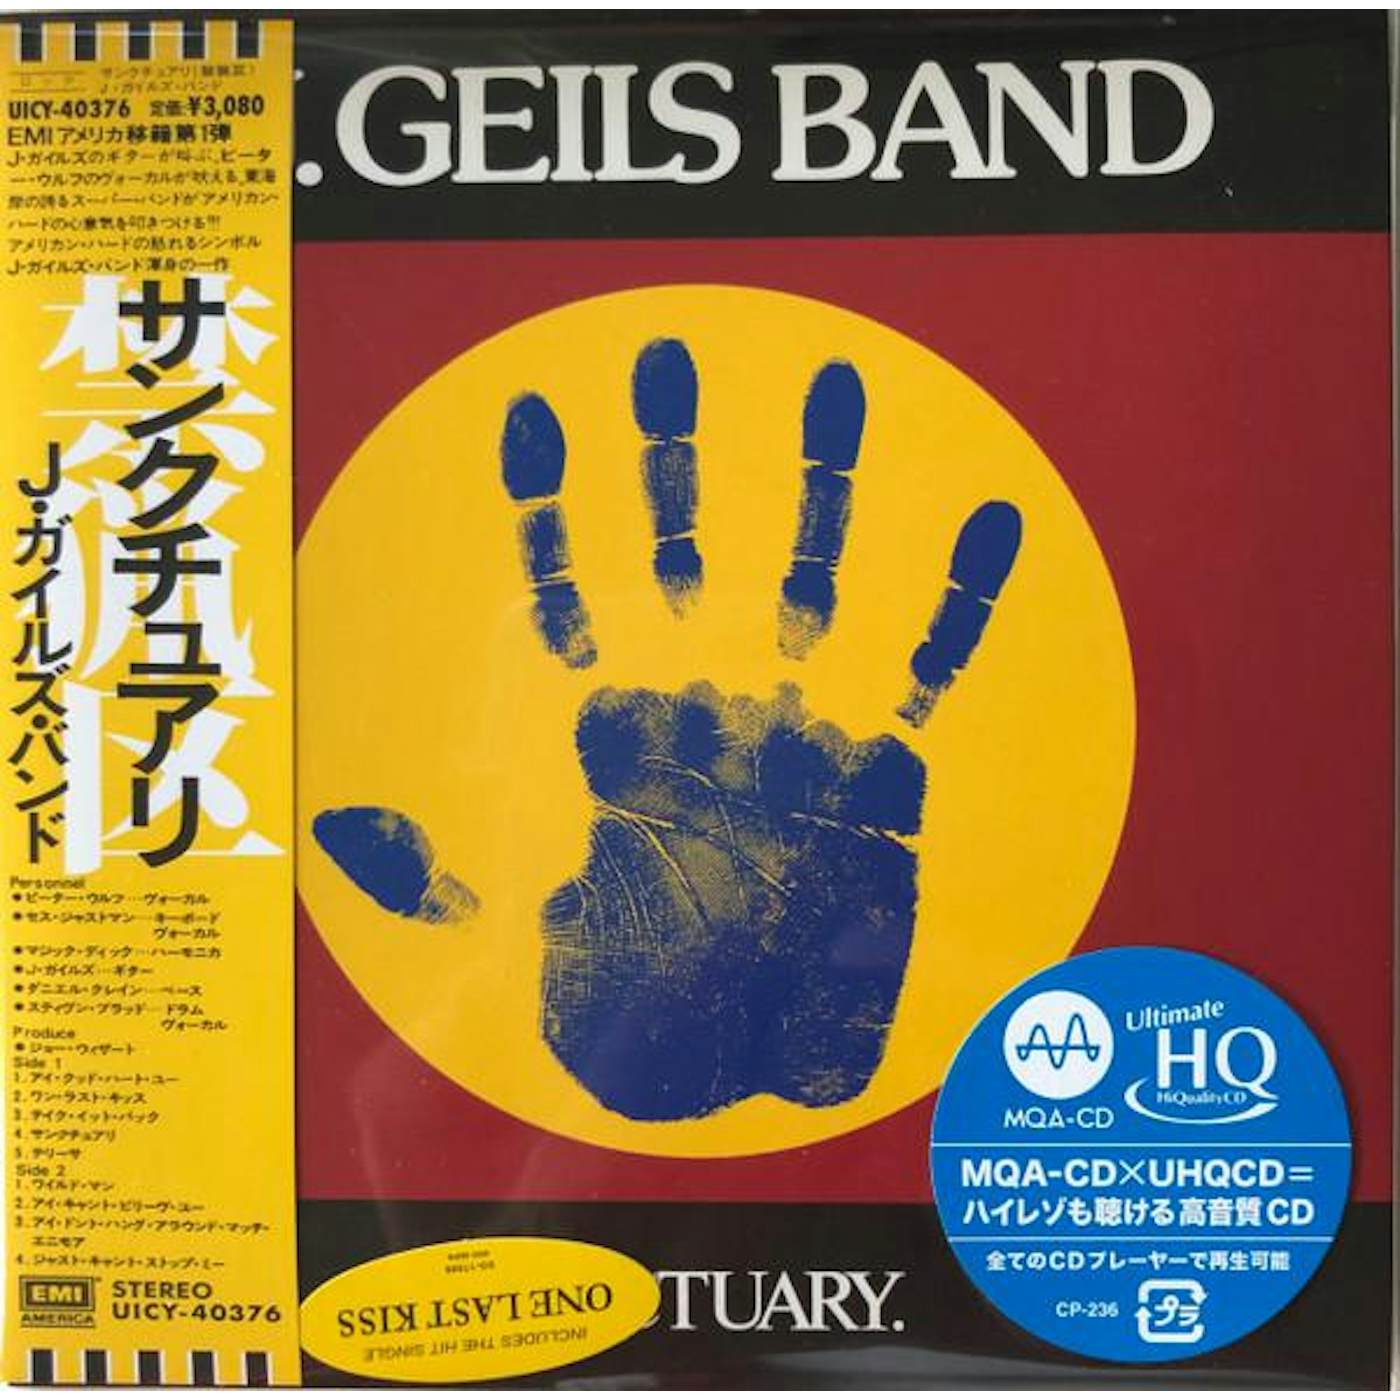 The J. Geils Band SANCTUARY (LIMITED) CD